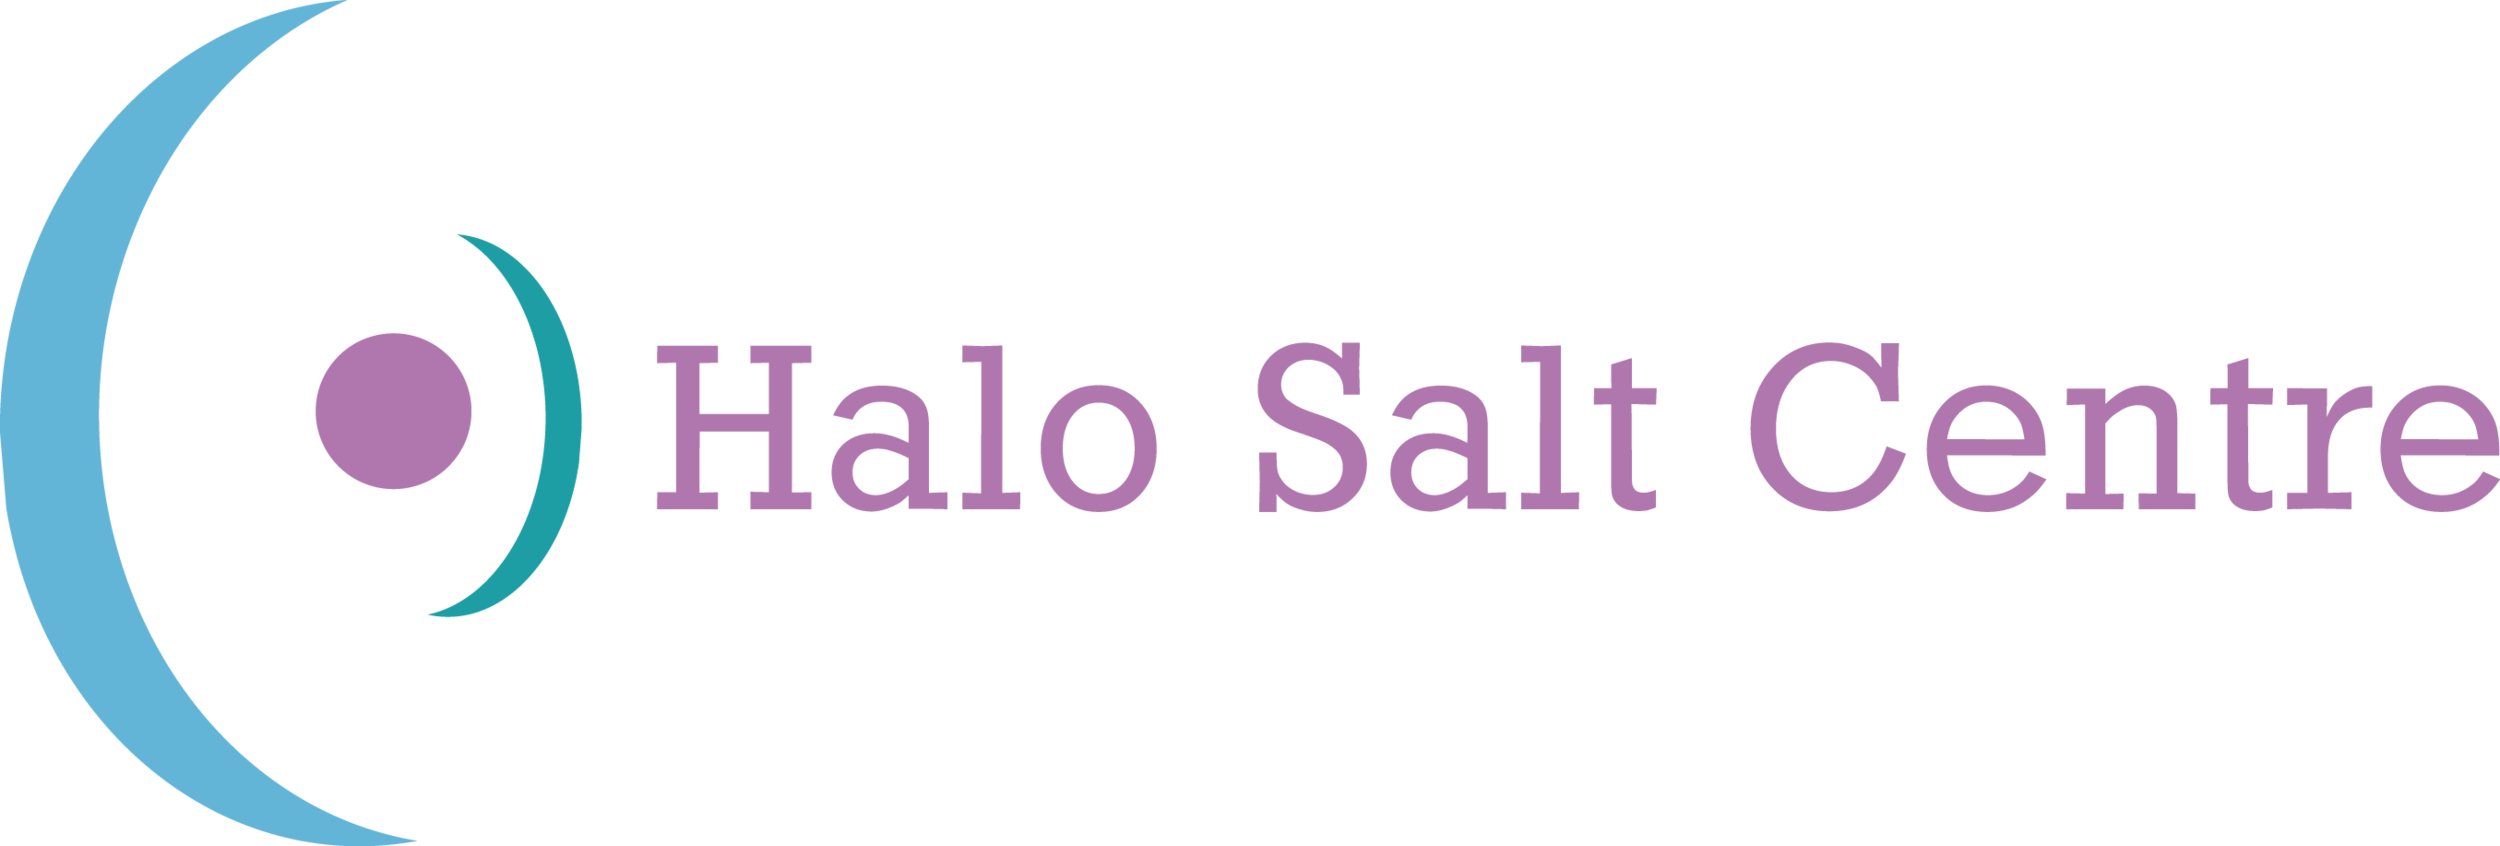 Halo Salt Centre